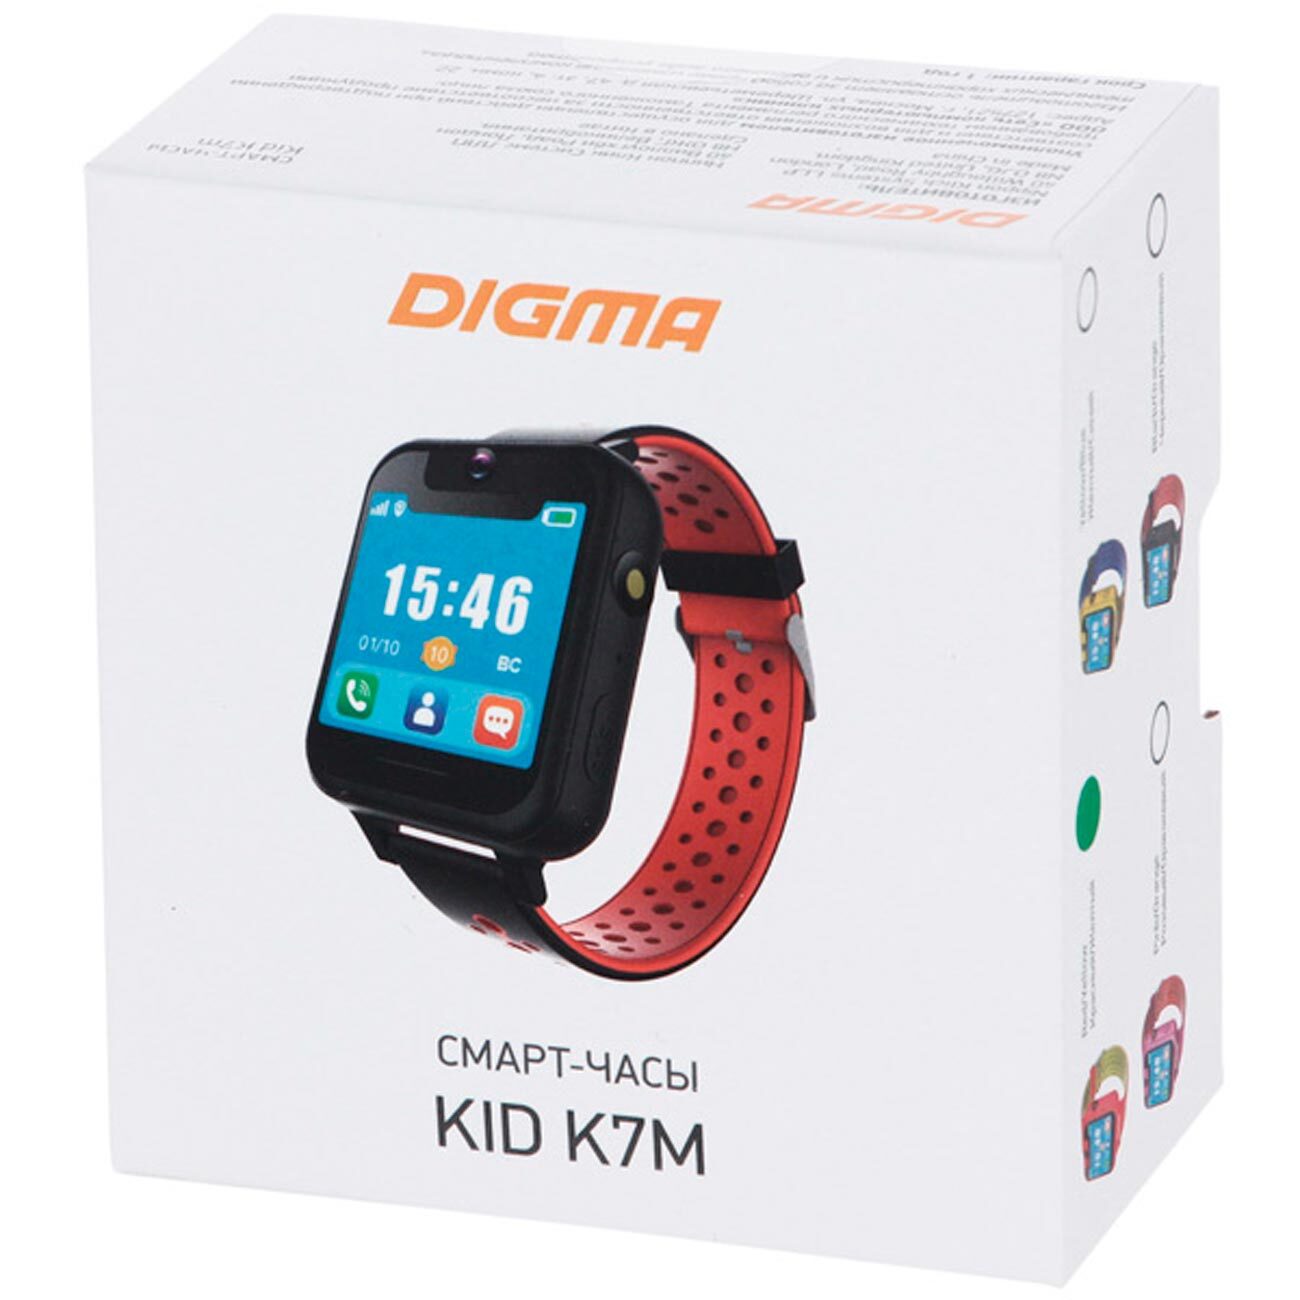 Час кид. Часы с GPS трекером Digma Kid k7m Red/Yellow. Digma Kid k7m. Часы с GPS трекером Digma Kid k7m Black/Orange. Детские часы Digma k7m.